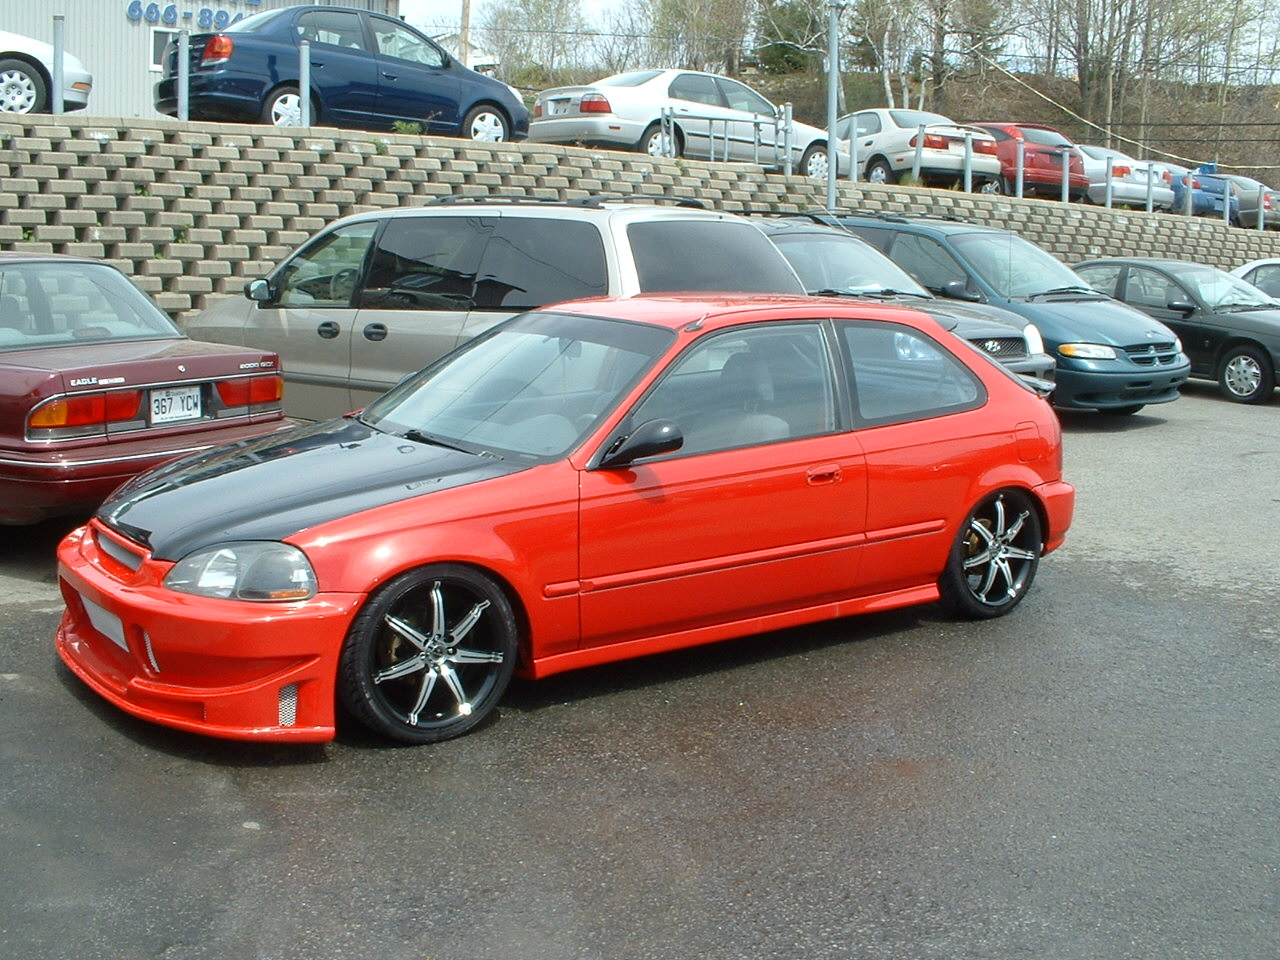 1997 Honda civic hatchback specifications #2